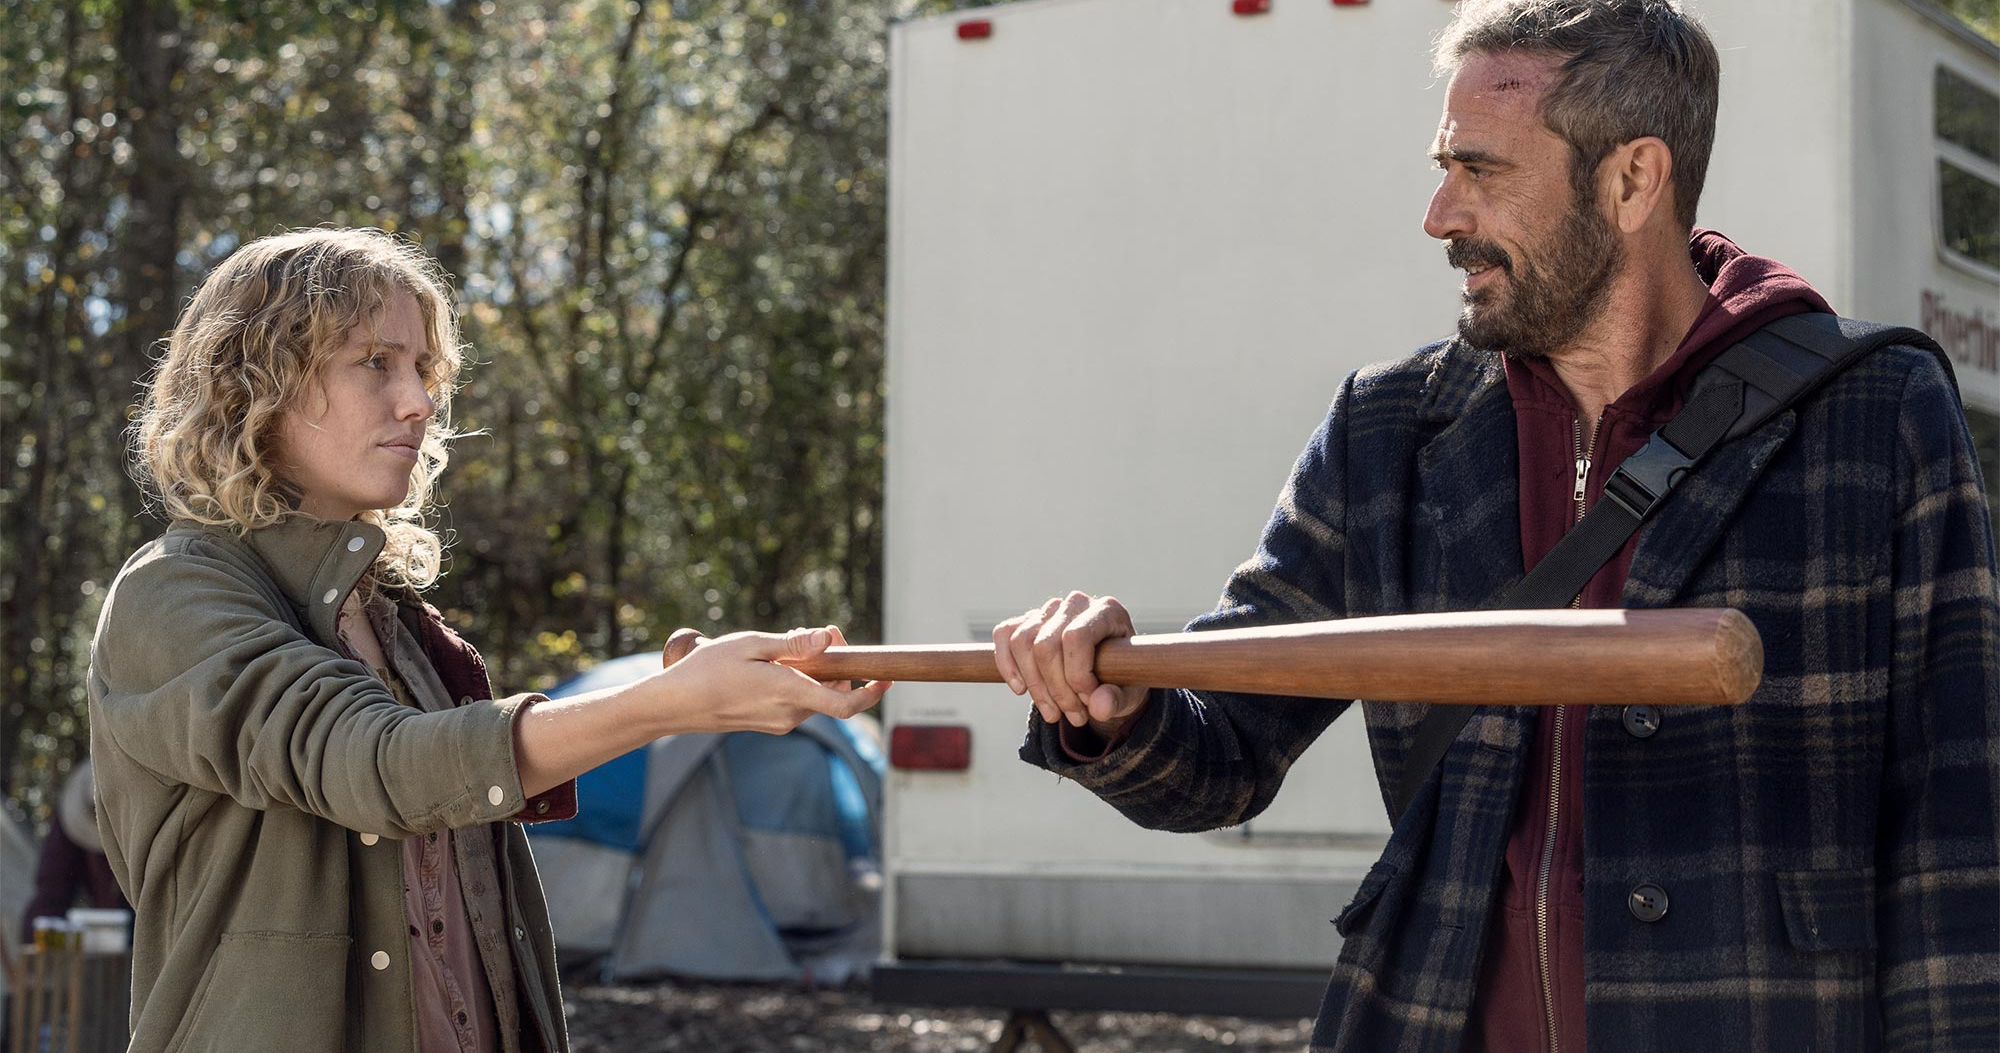 The Walking Dead Negan Spinoff May Happen as AMC Gauges Fan Interest